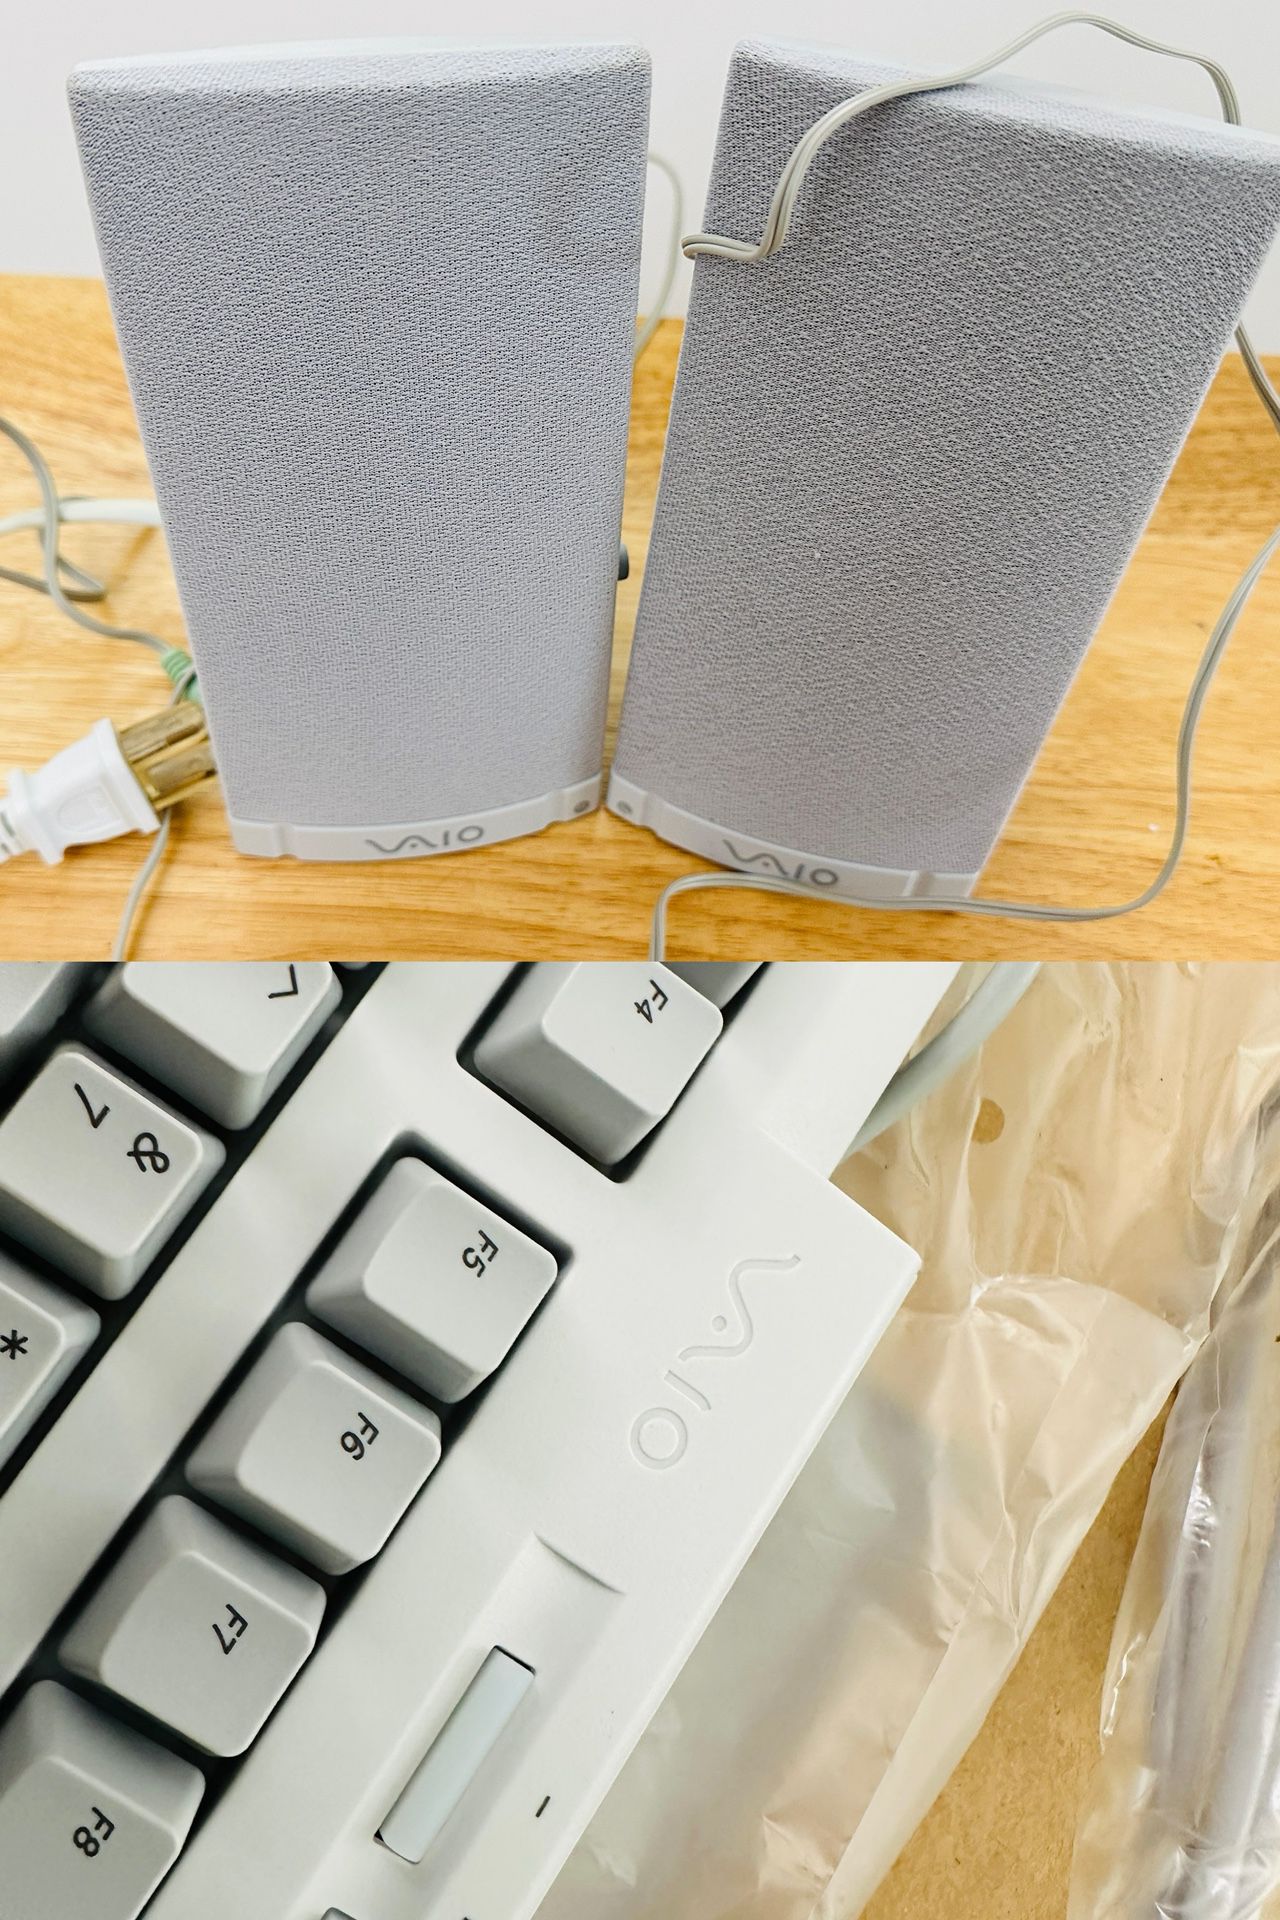 Sony Vaio Speaker And Computer Keyboard 